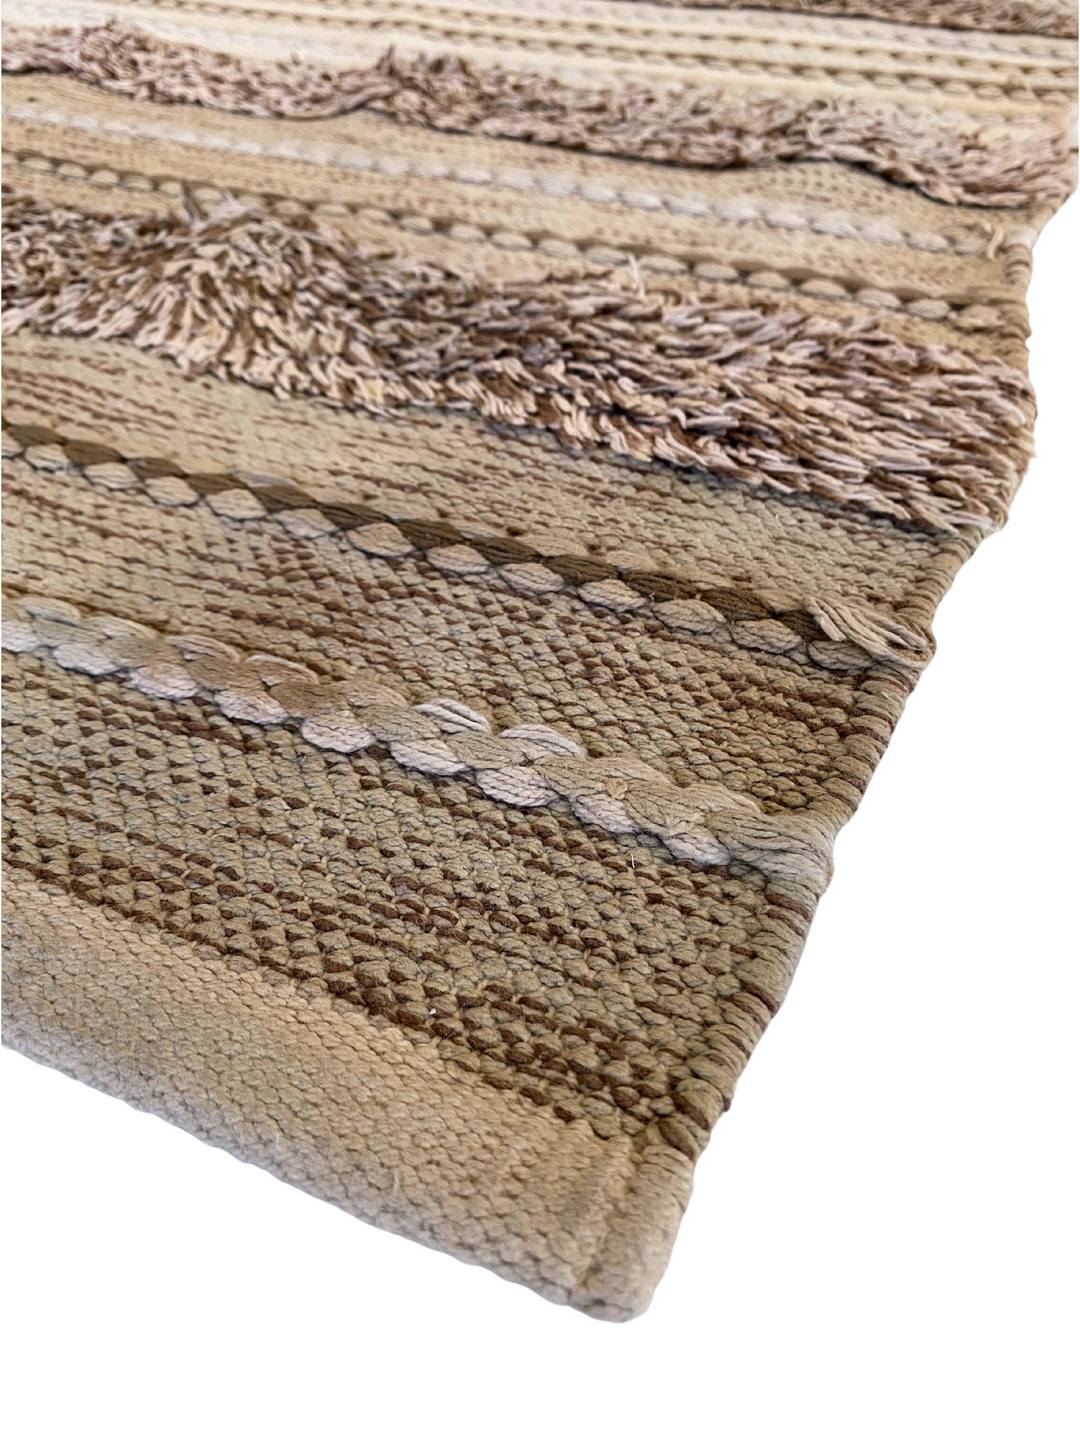 Shaggy lattice Moroccan Rug - Size: 4.4 x 2.4 - Imam Carpet Co